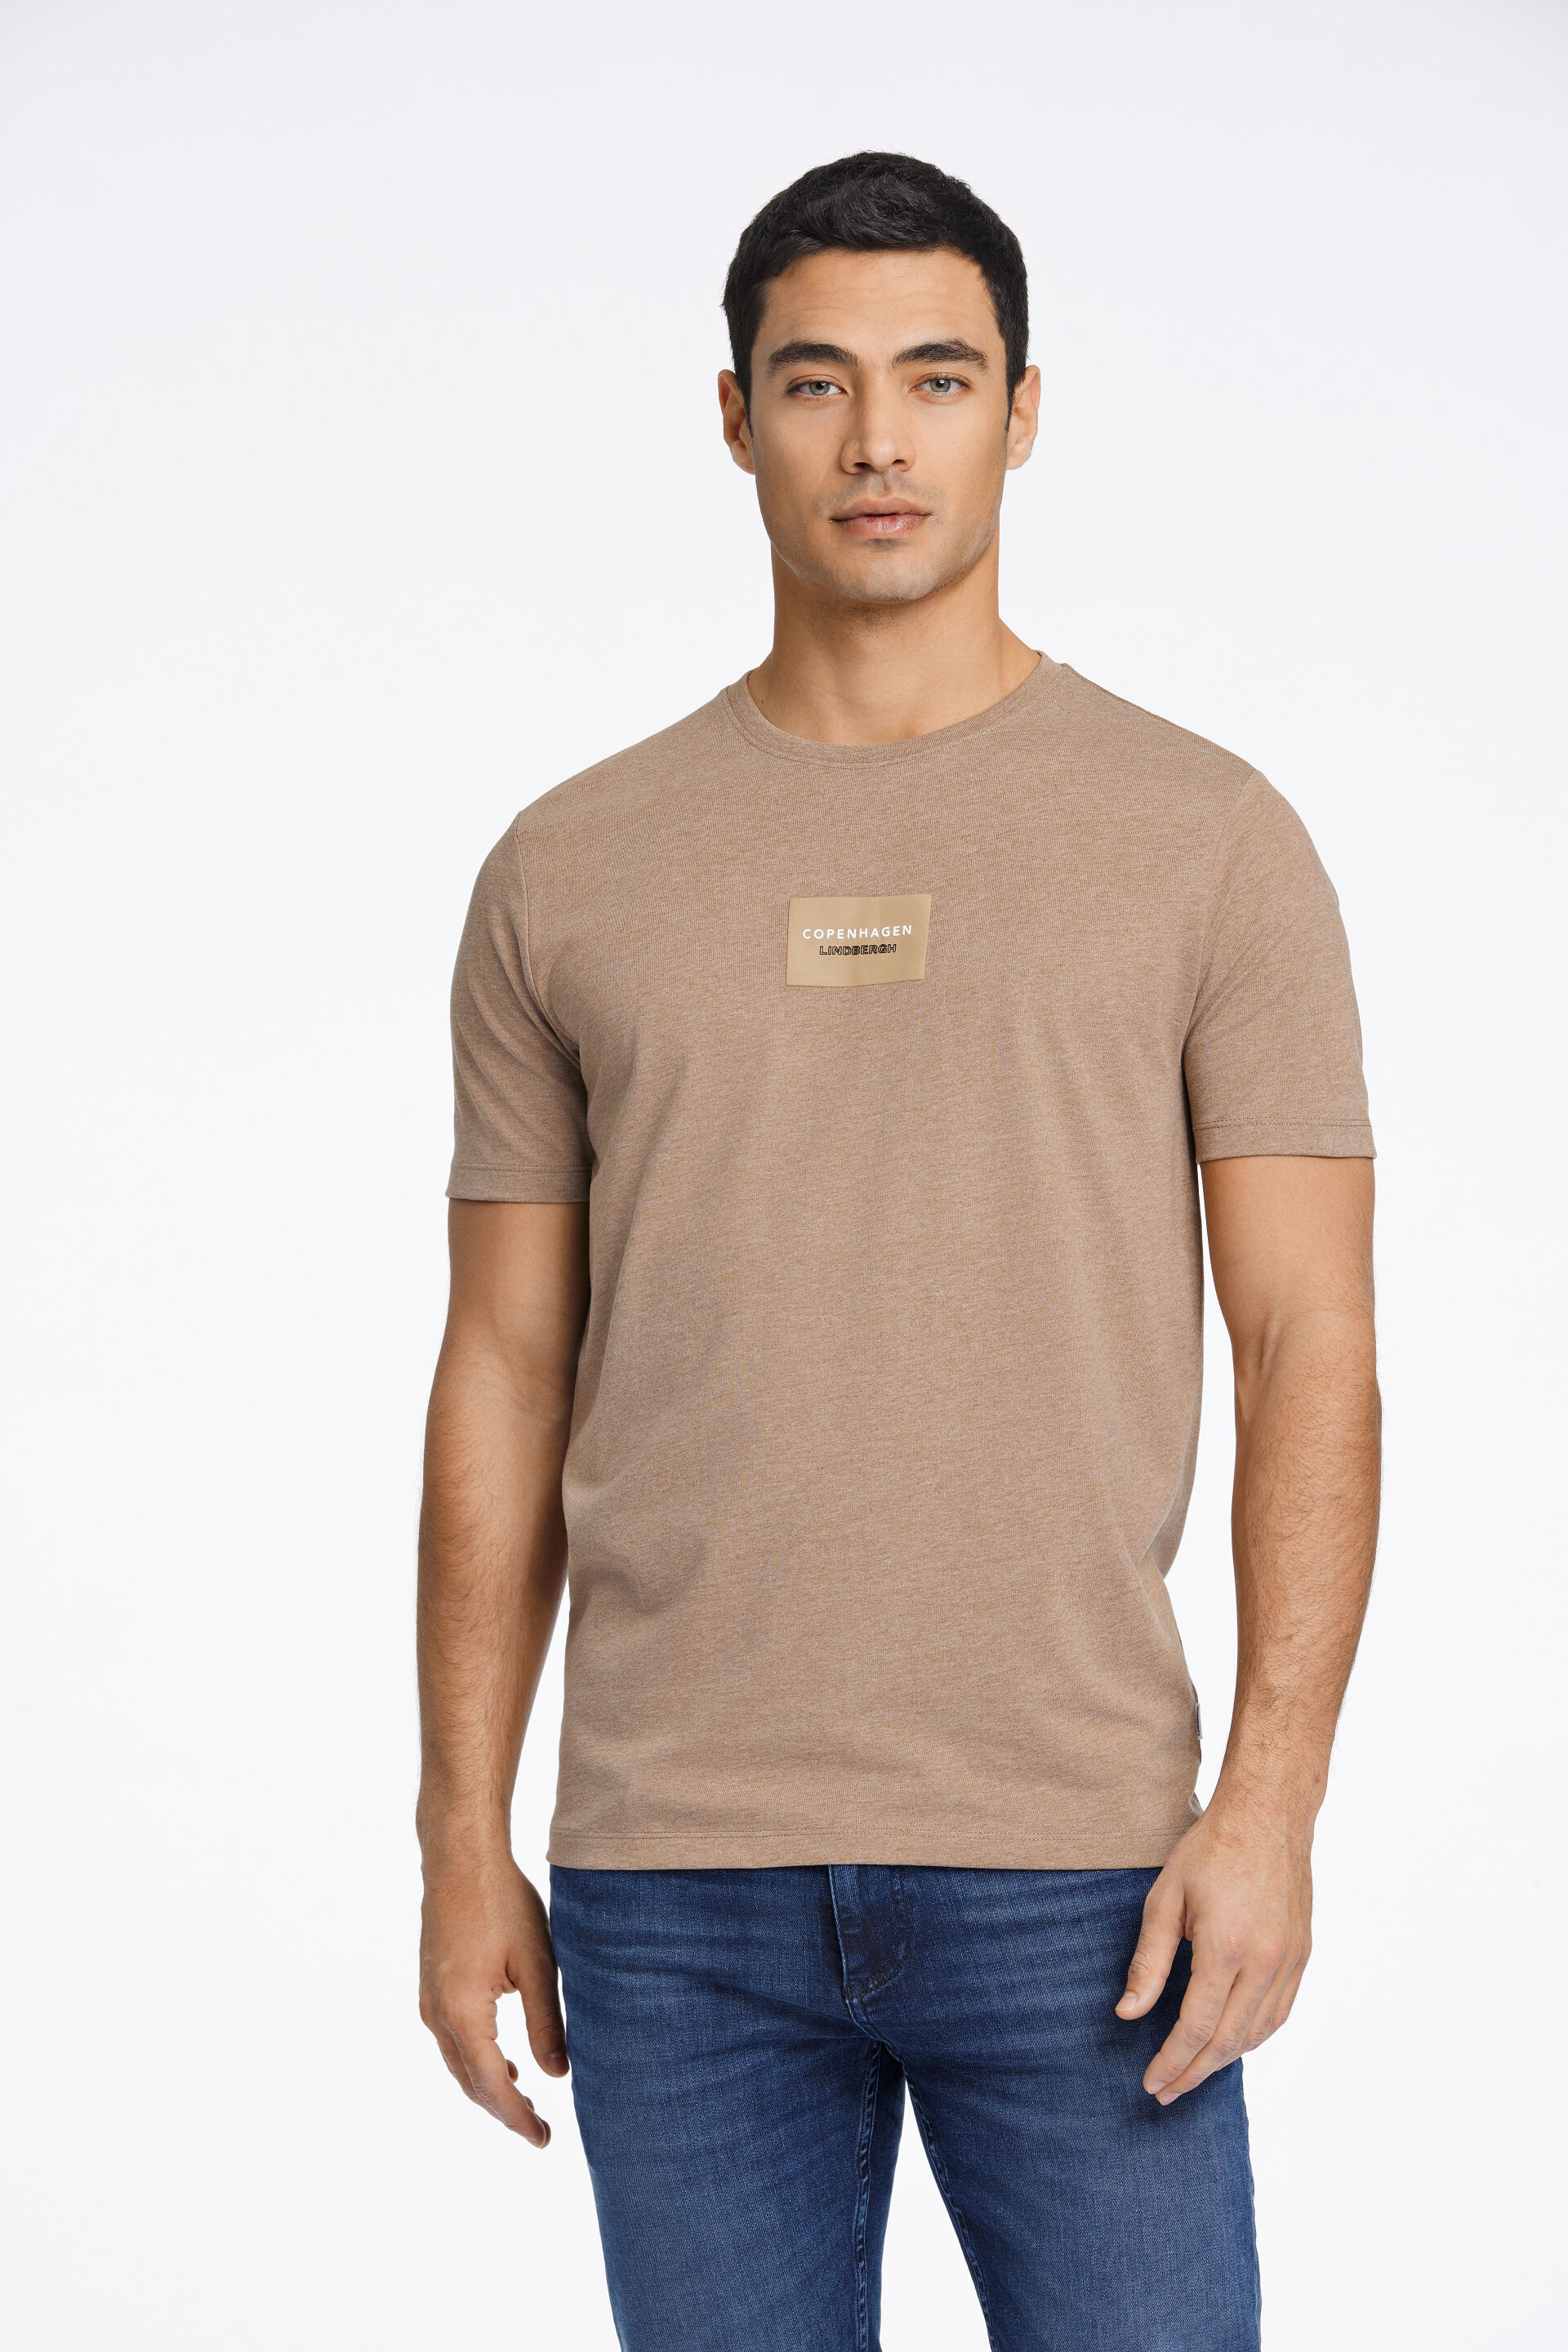 Lindbergh  T-shirt Sand 30-400015